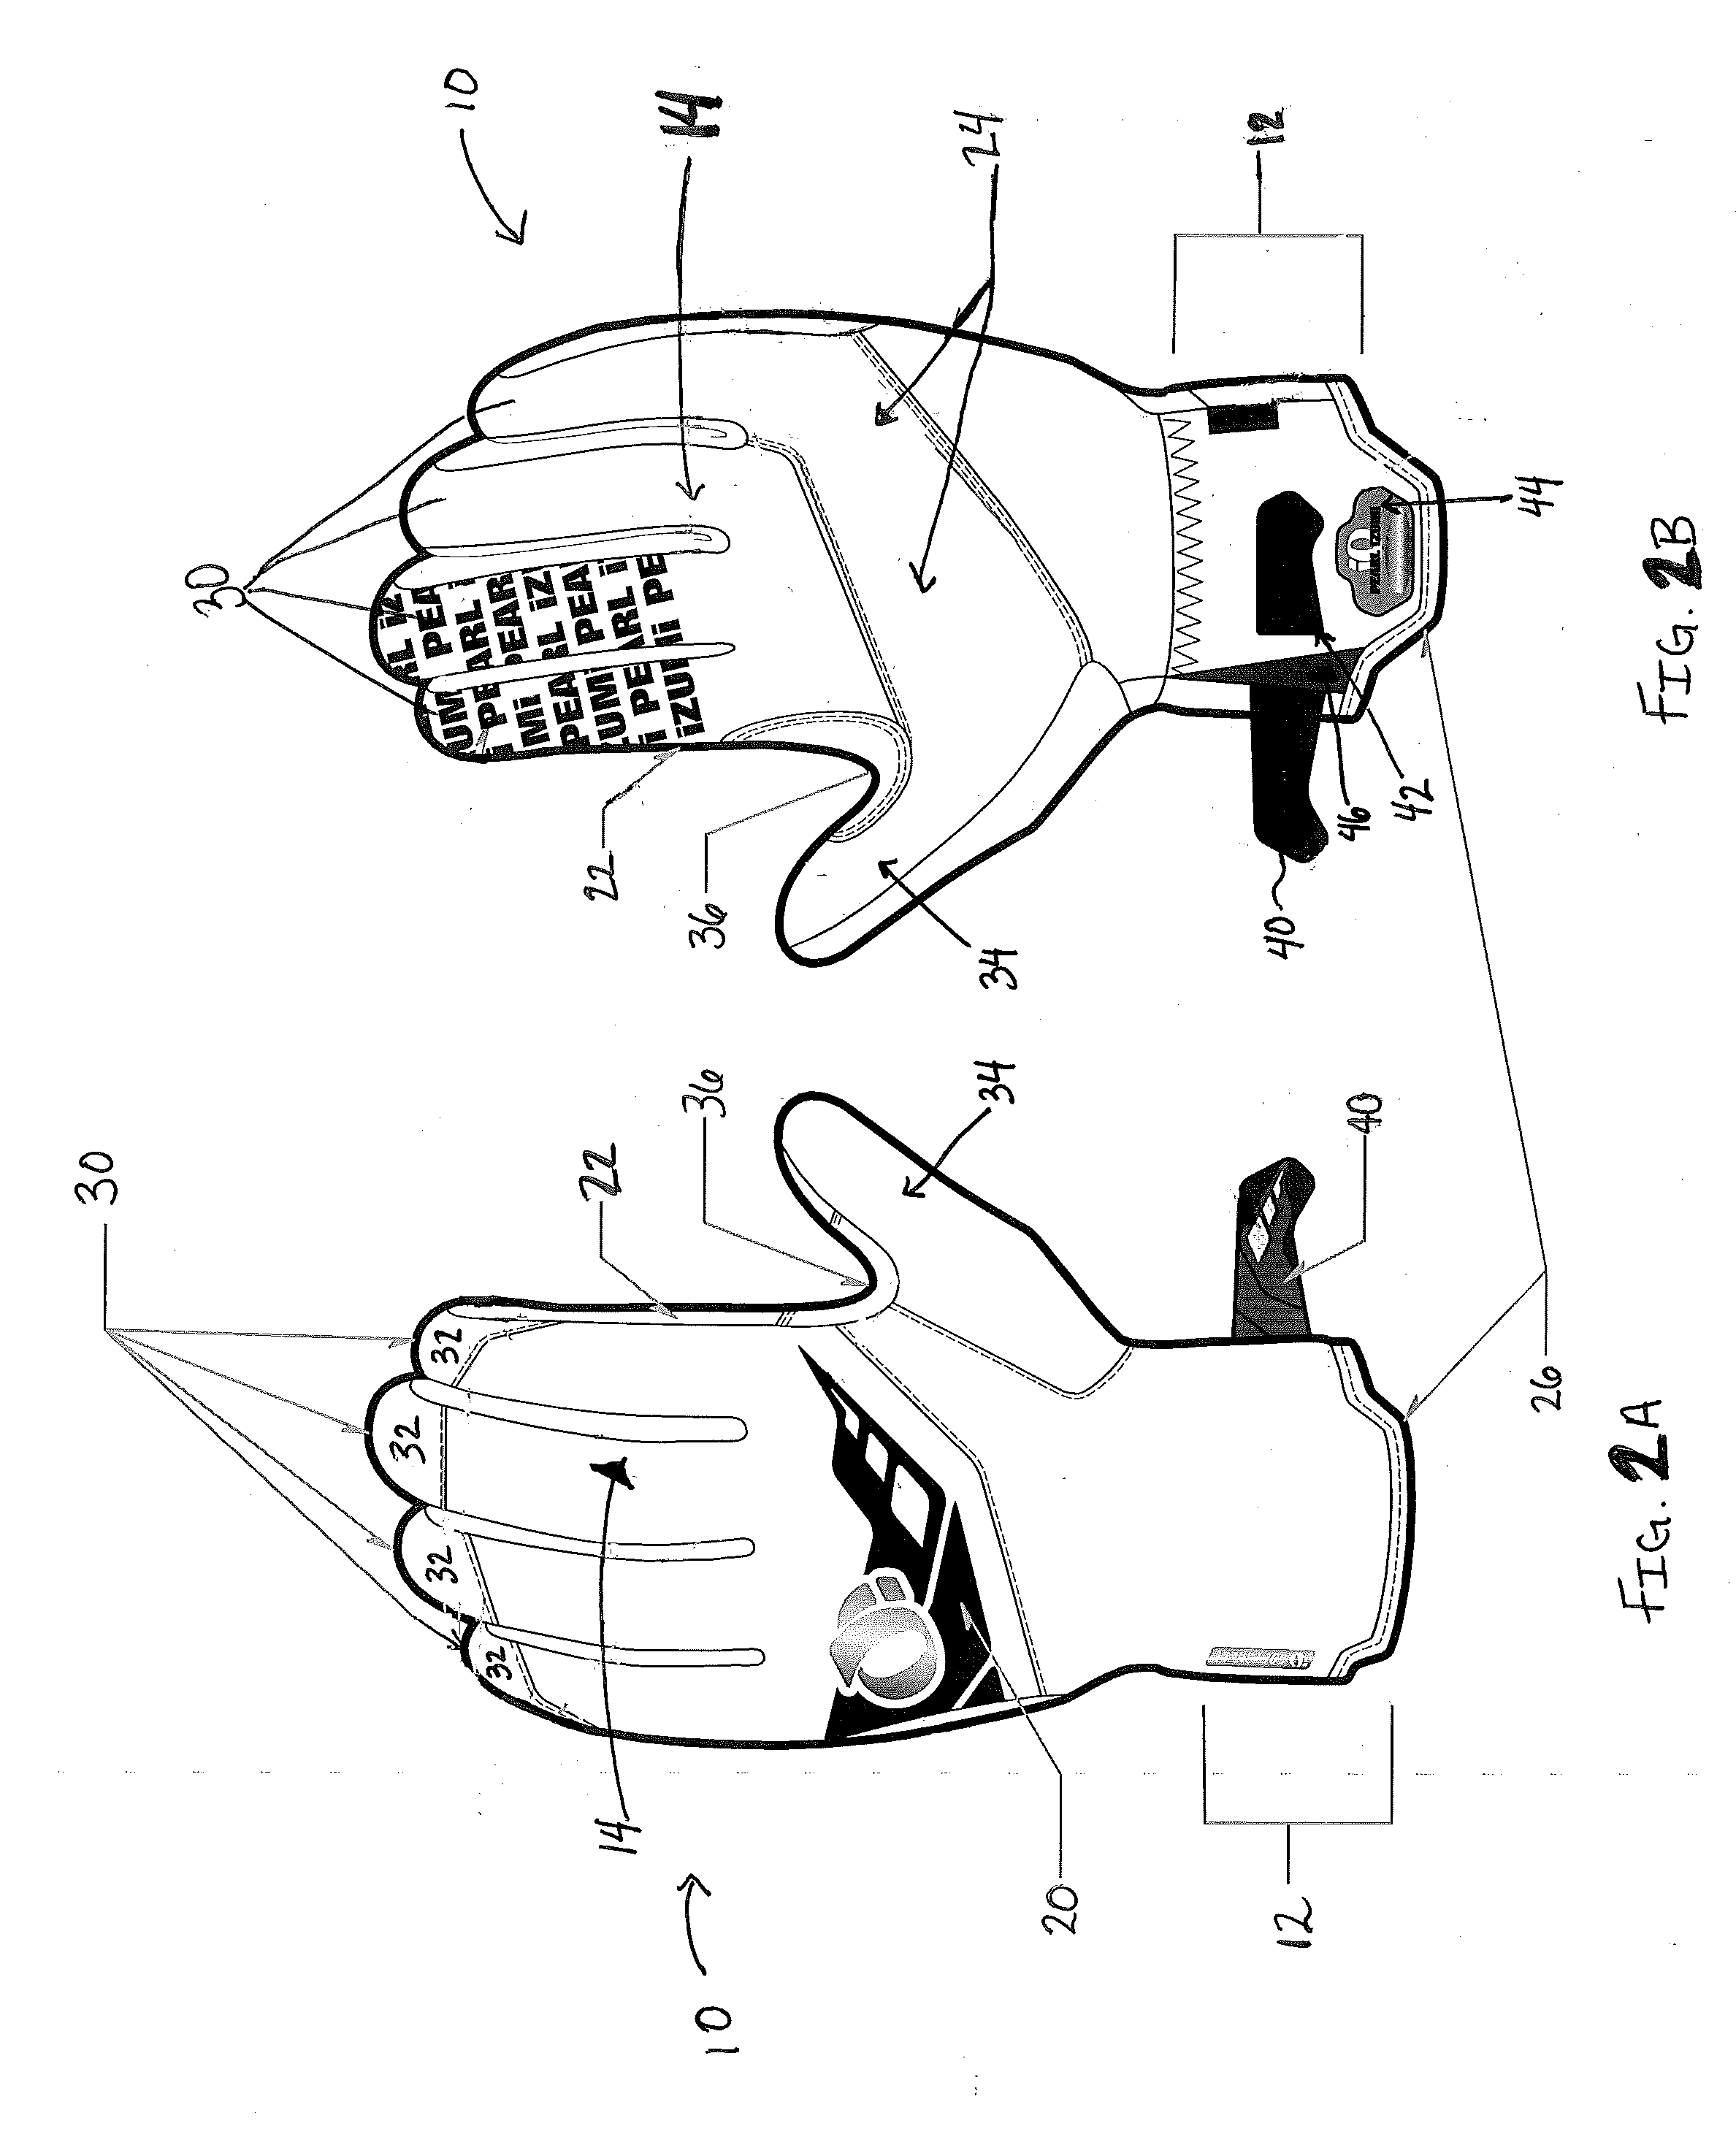 Glove with palm hammock